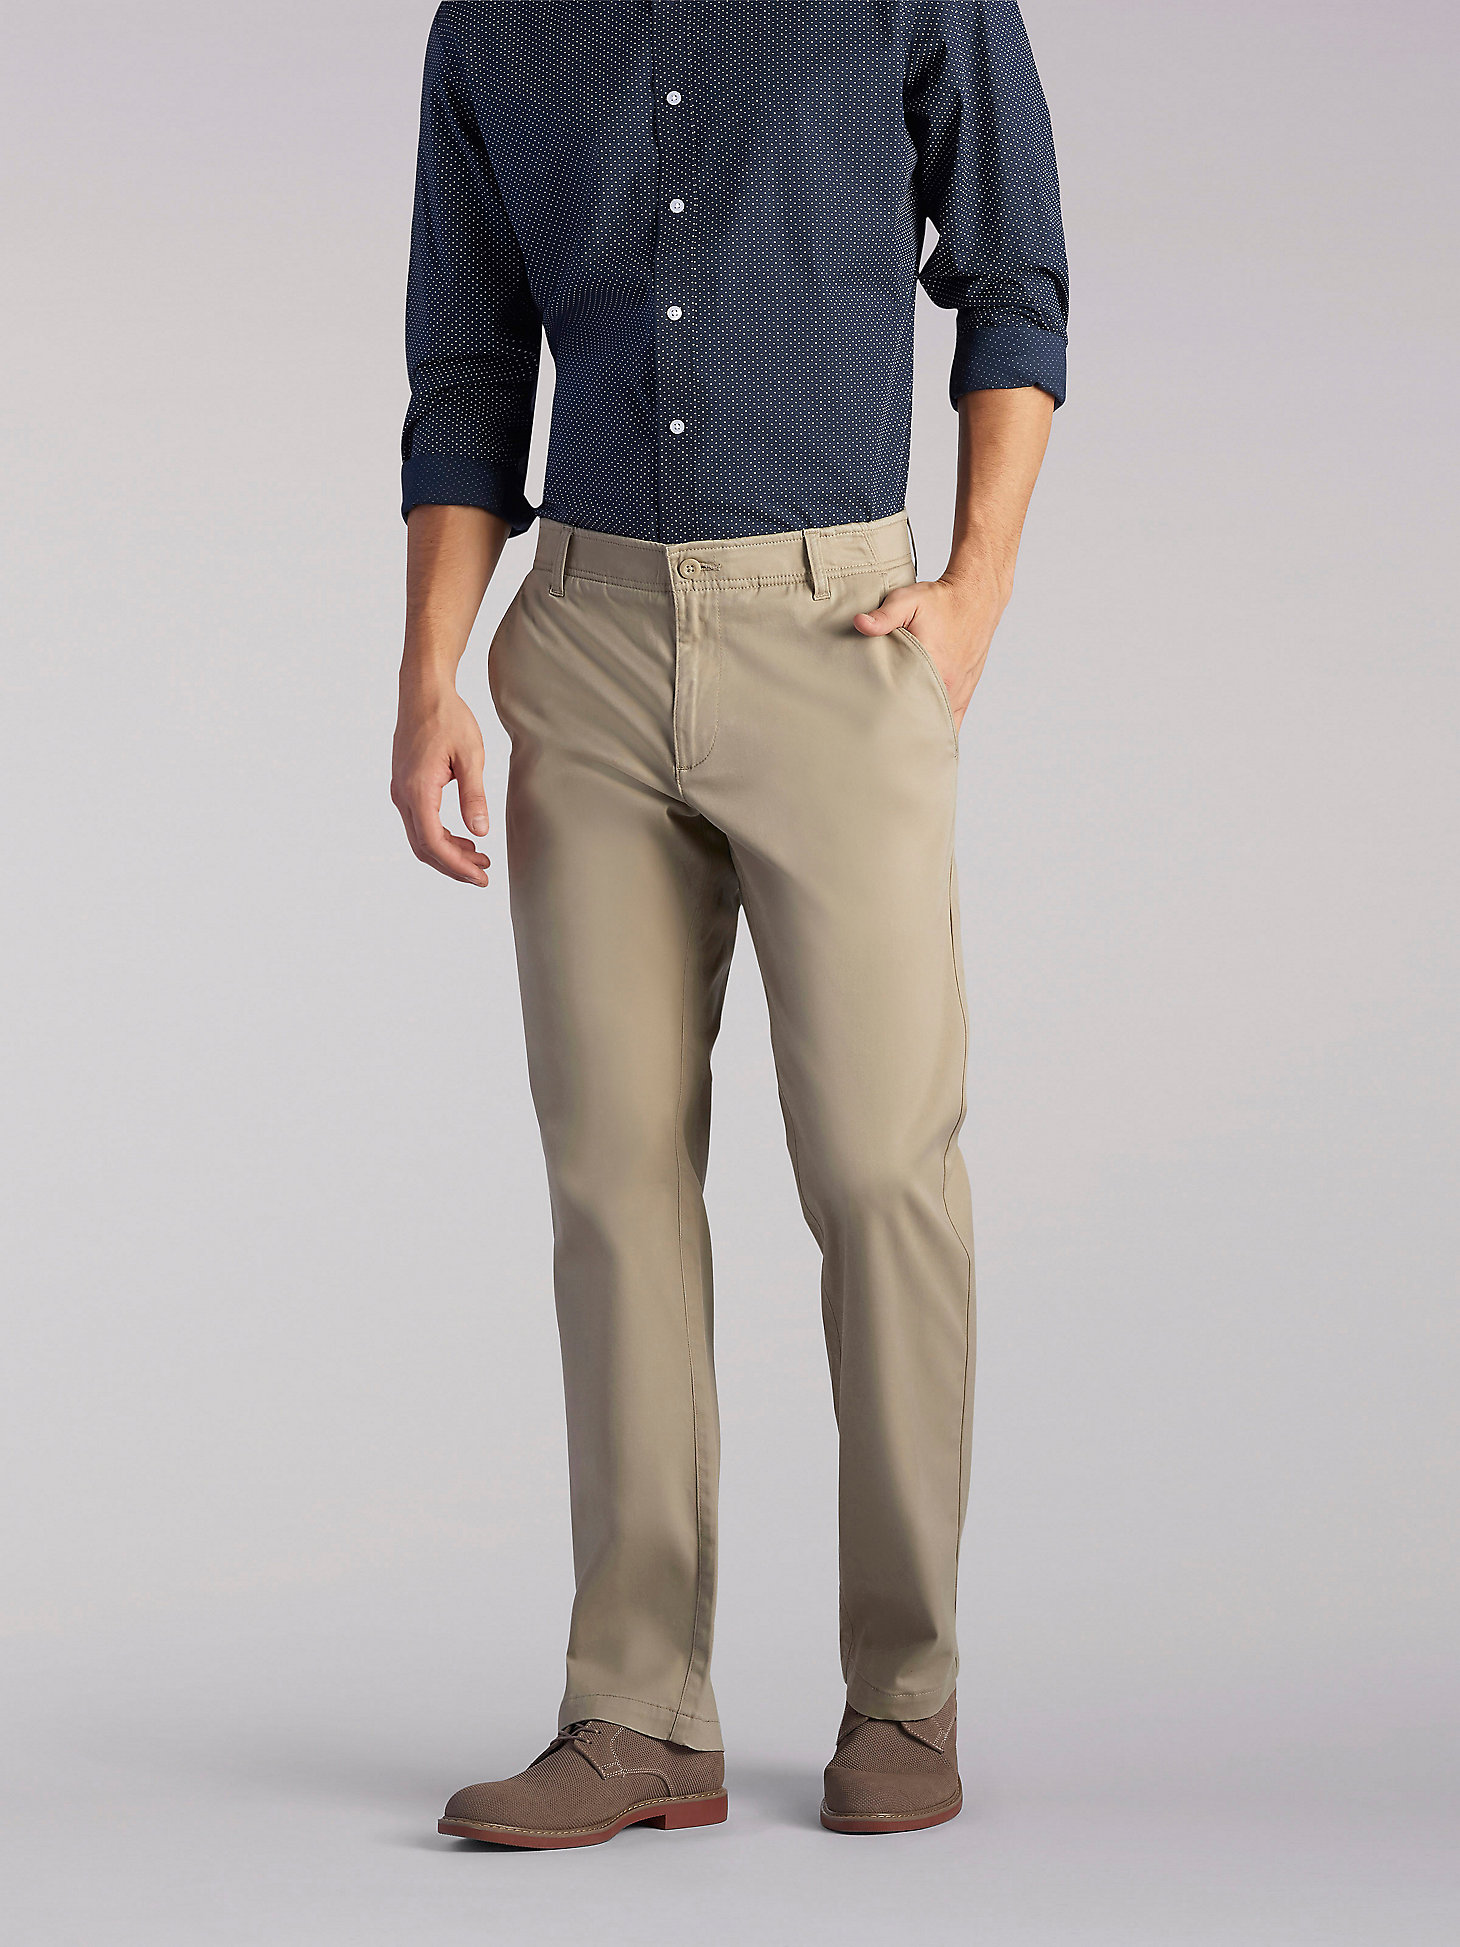 discount 82% H&M slacks MEN FASHION Trousers Straight Navy Blue 48                  EU 